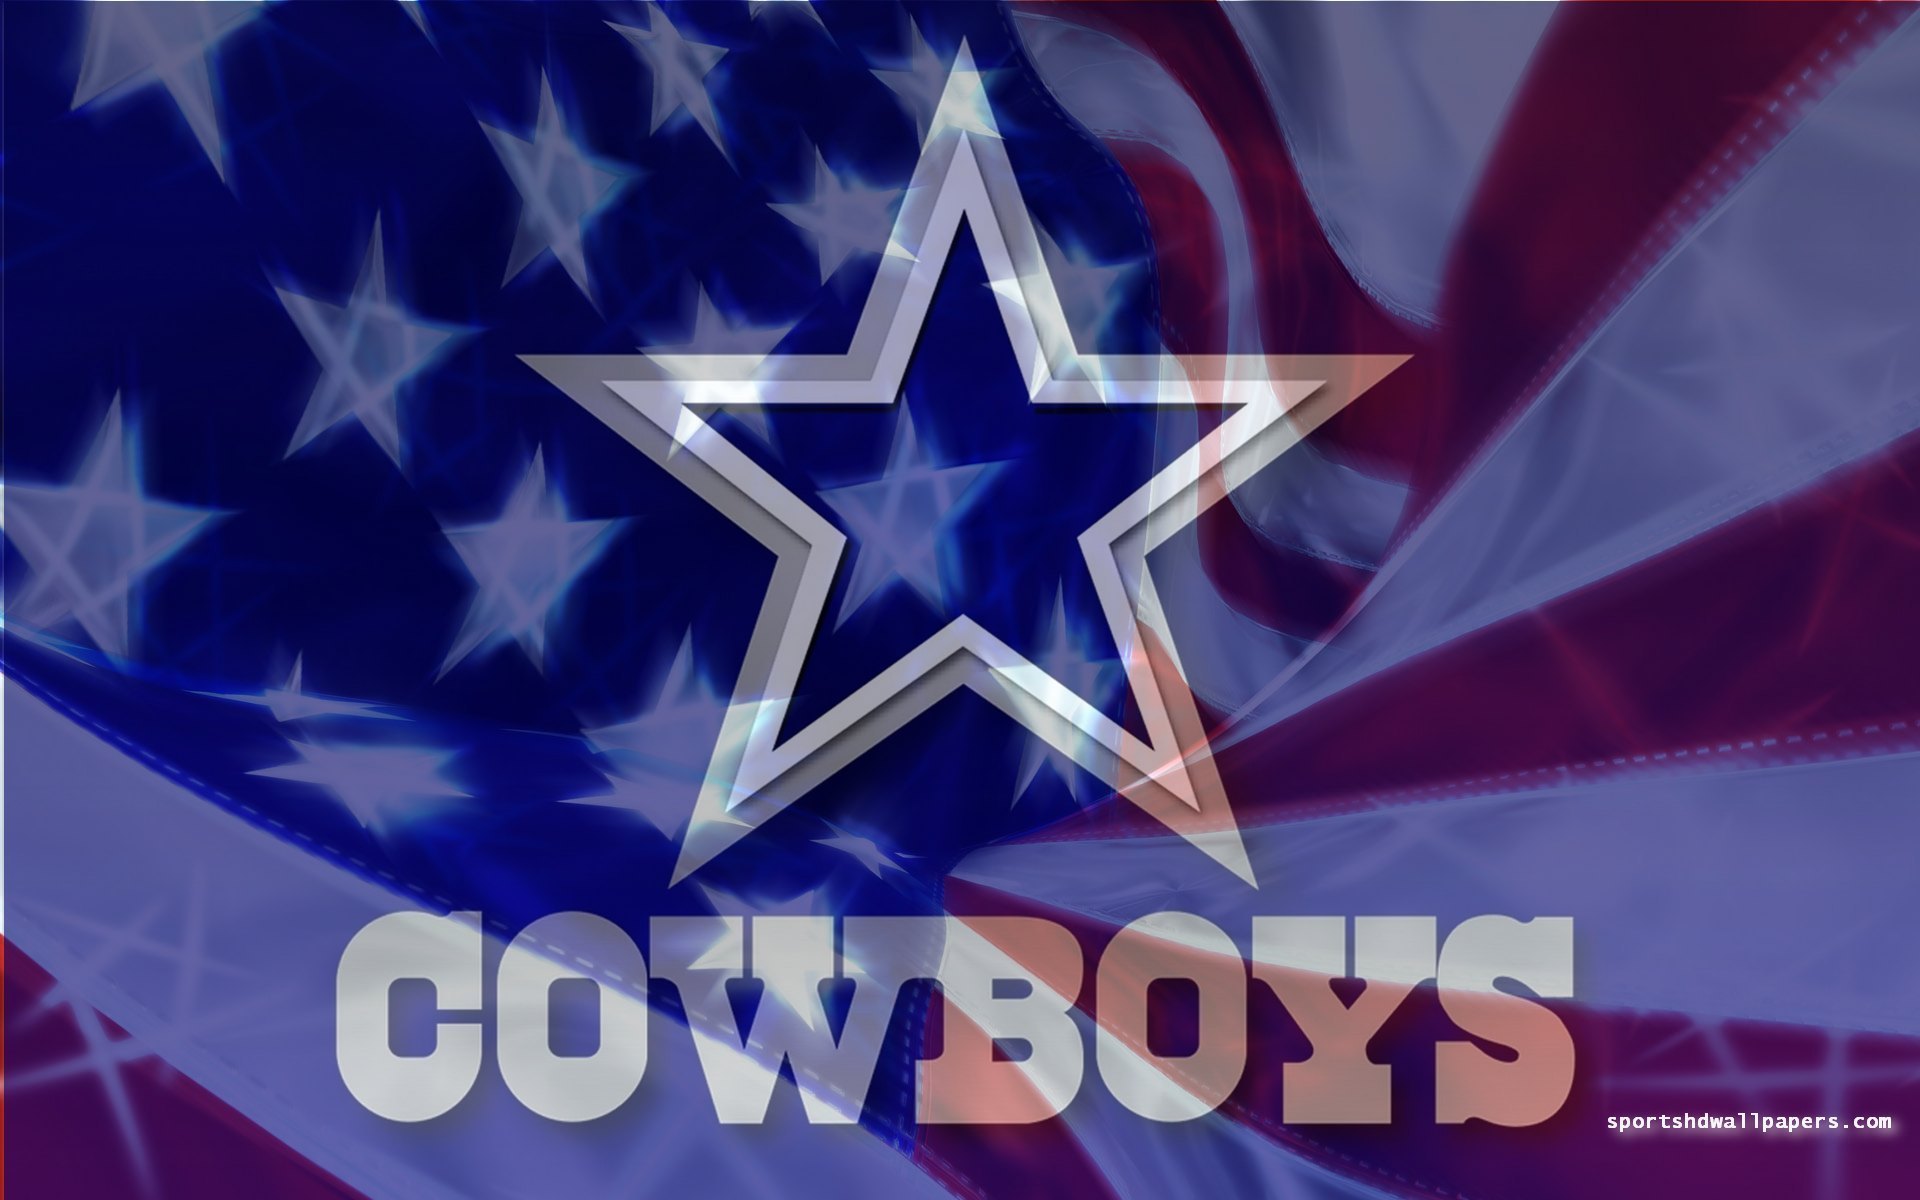 RealTalkSportsMania Are The Dallas Cowboys Still Americas Team